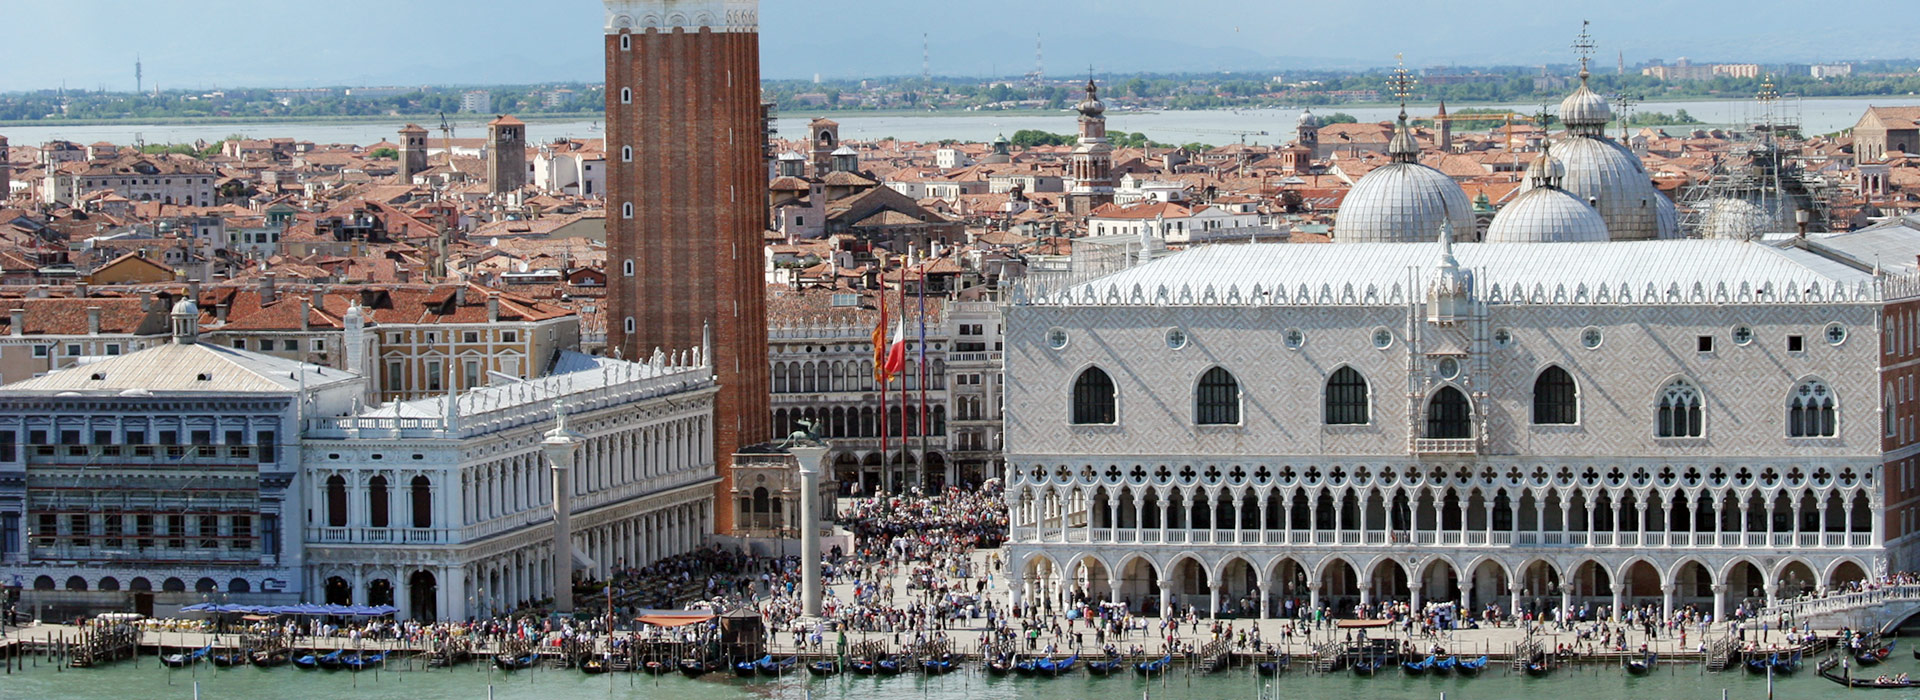 Venice Tourist Information